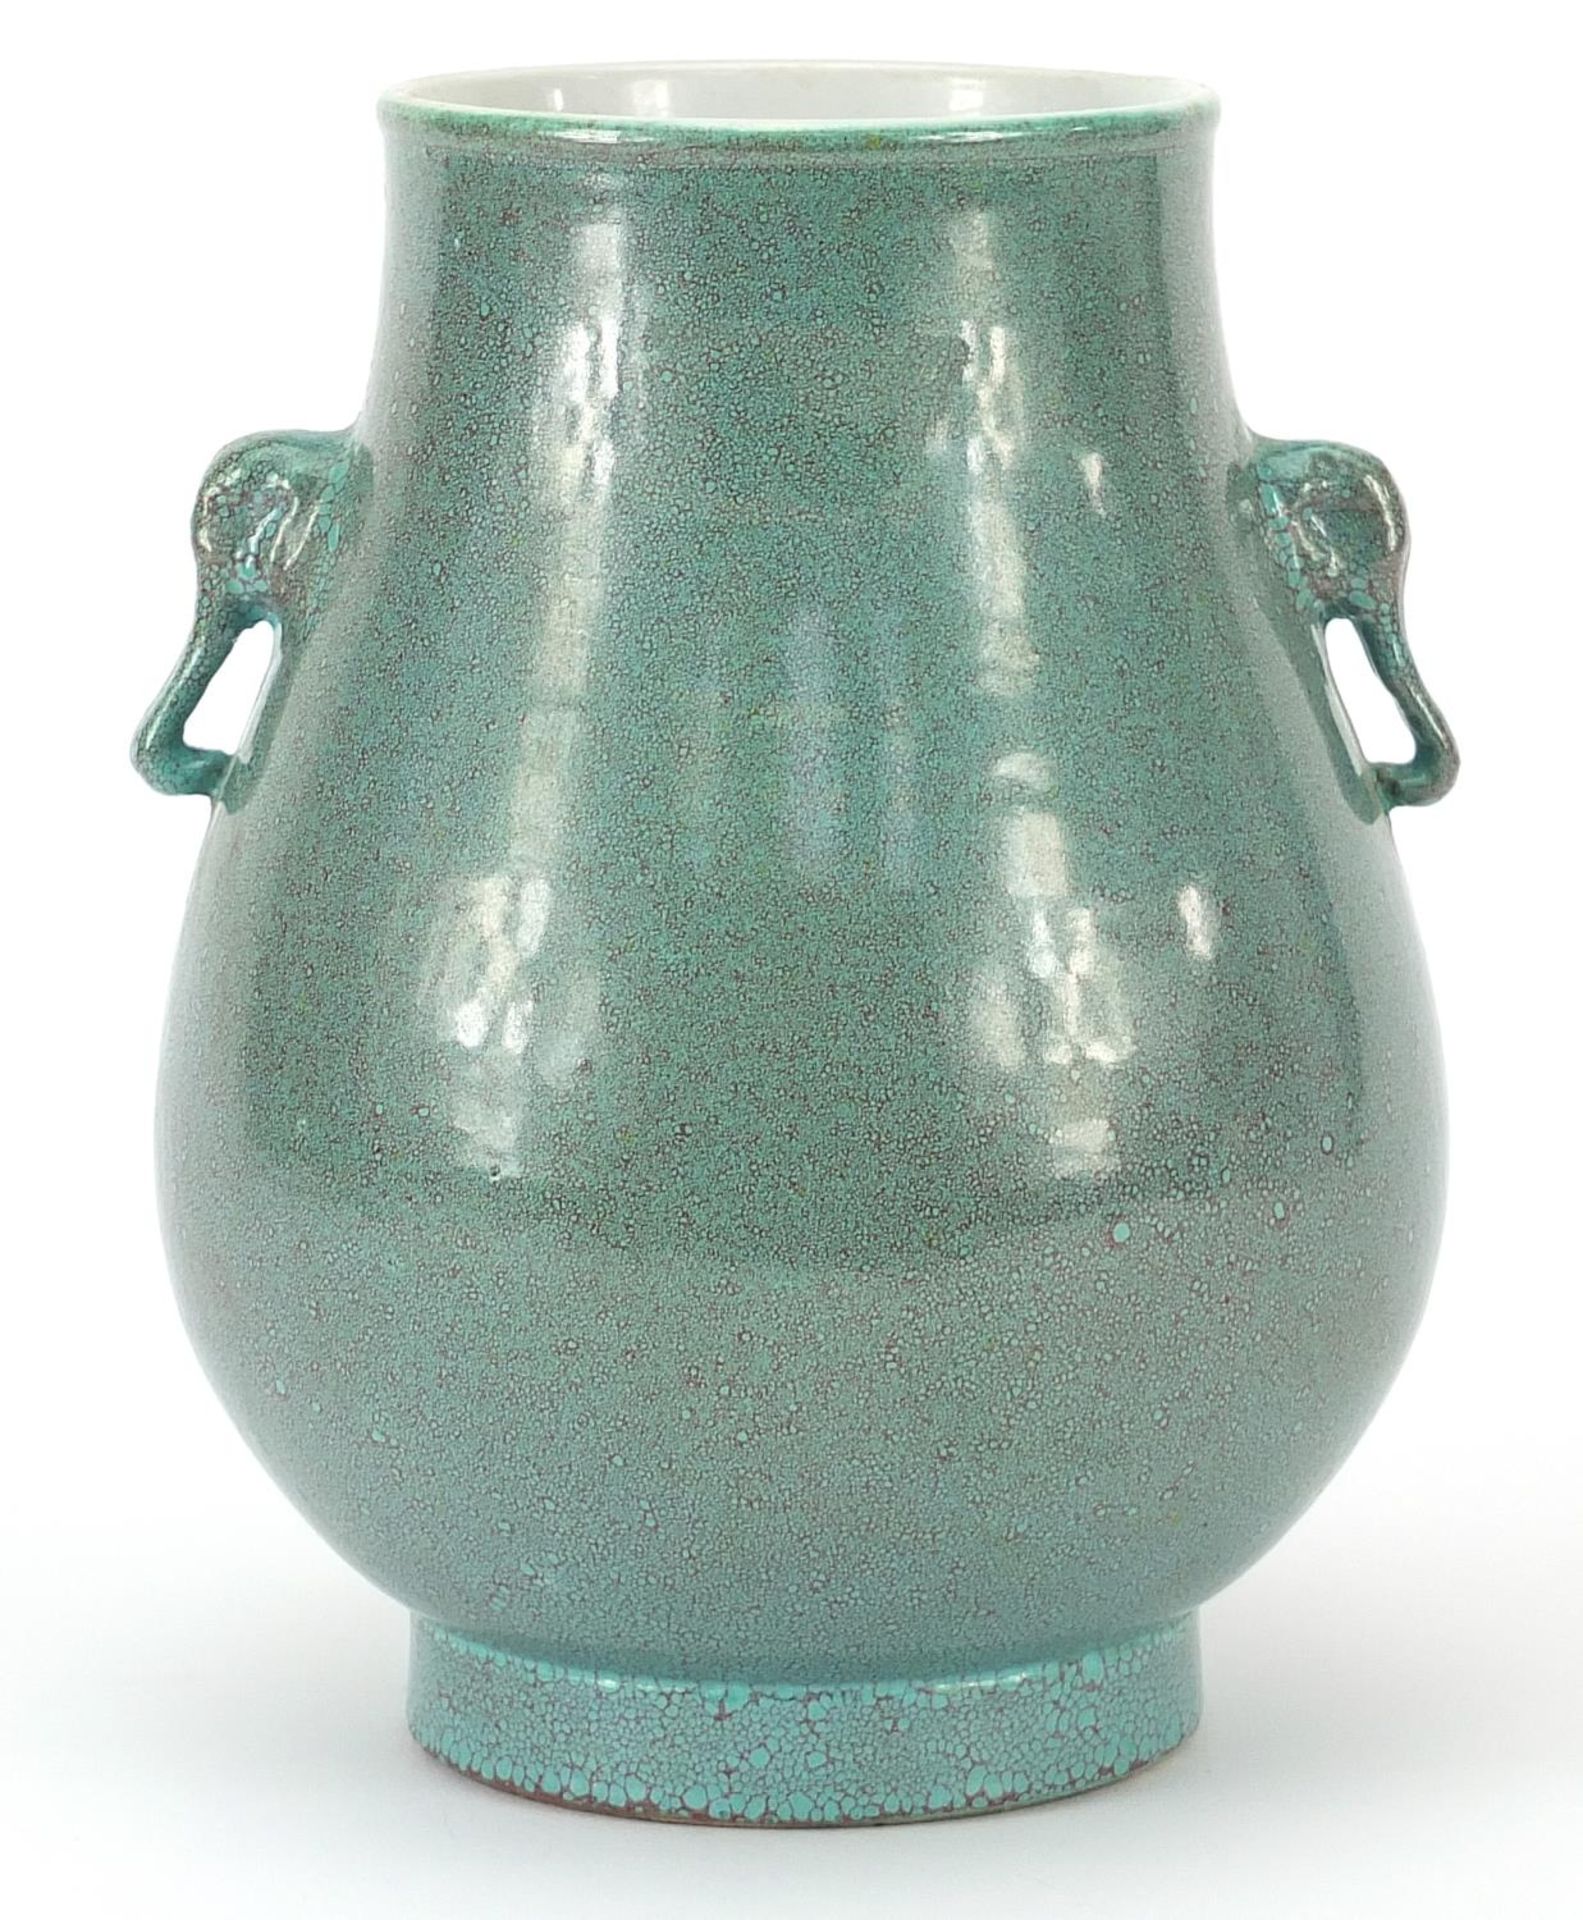 Chinese porcelain hu arrow vase with animalia handles having a spotted turquoise glaze, 19cm high - Image 2 of 3